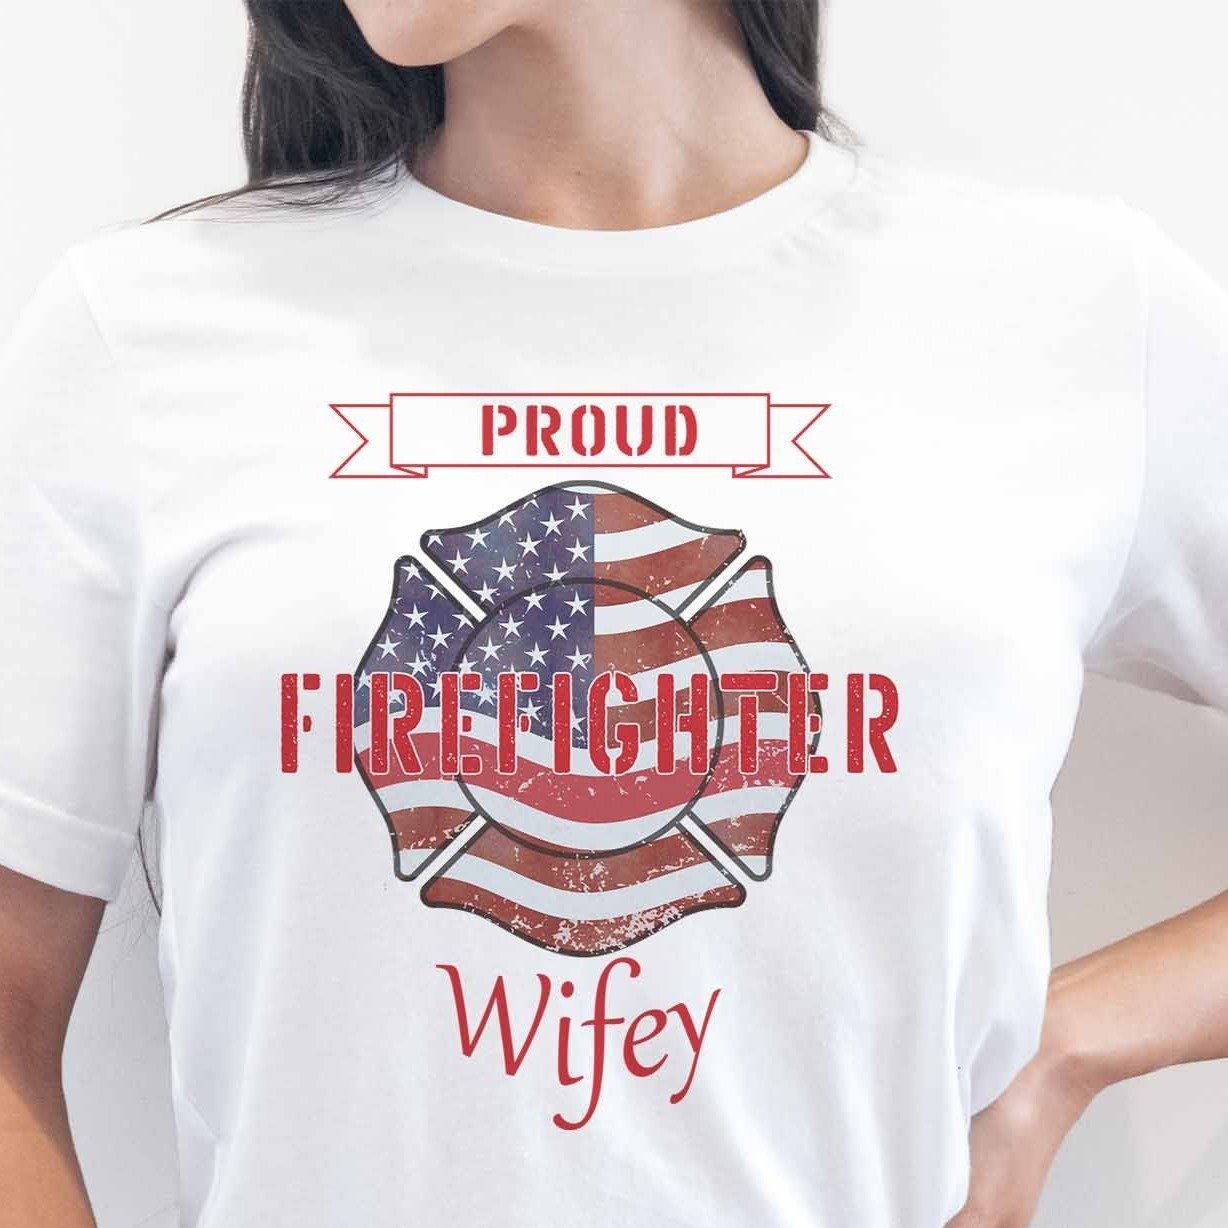 Proud Firefighter Wifey - My Custom Tee Party